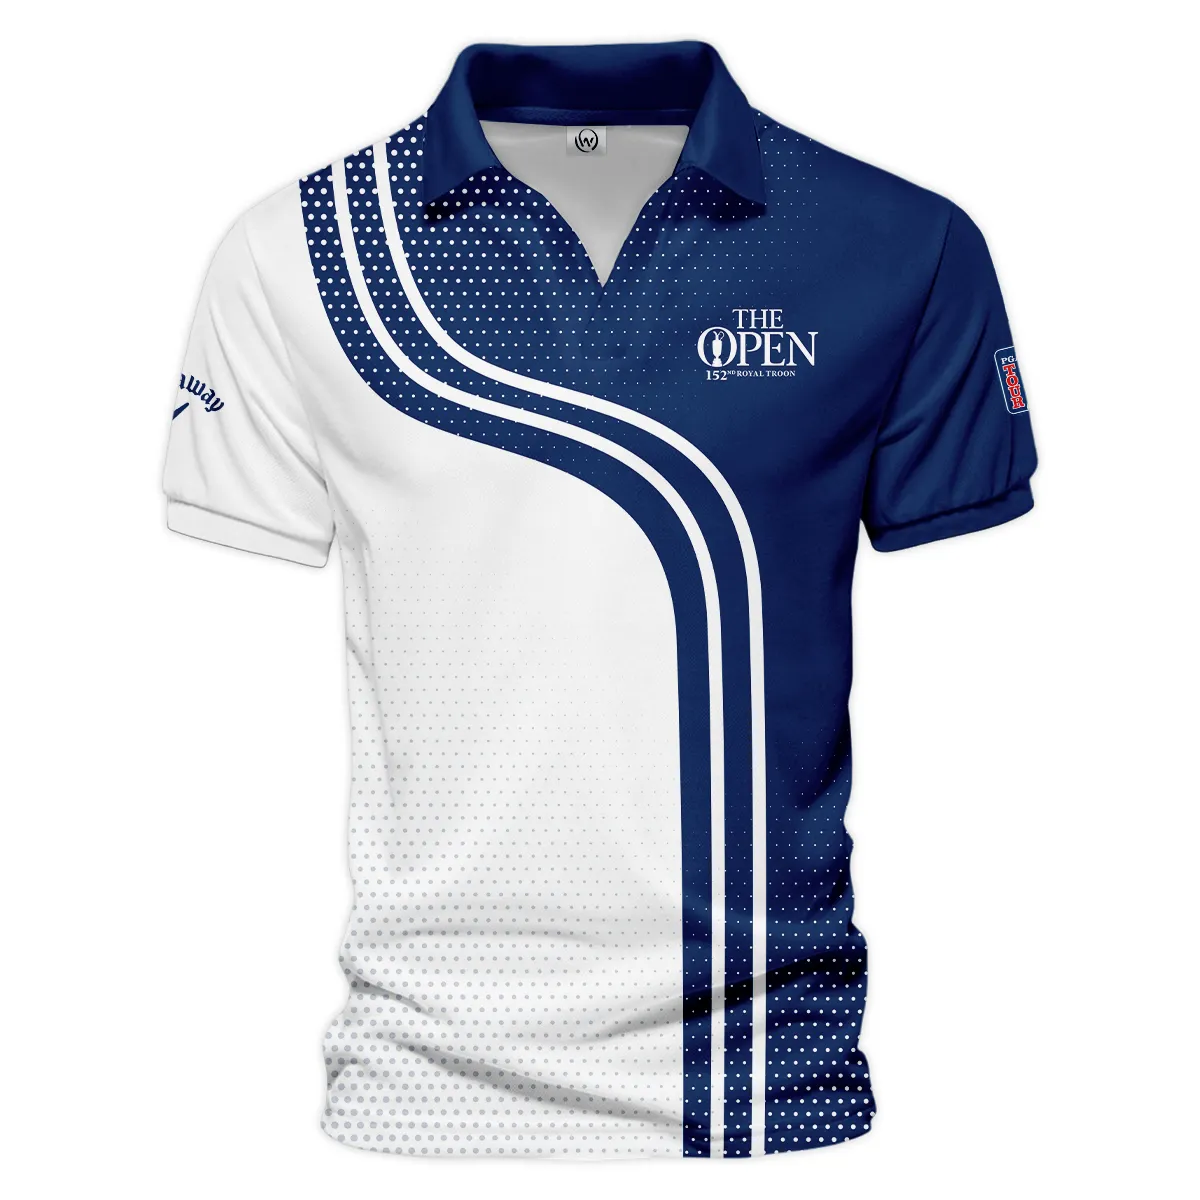 Golf Blue Mix White Sport 152nd Open Championship Pinehurst Callaway Vneck Polo Shirt All Over Prints  QTTOP1806A1CLWZVPL